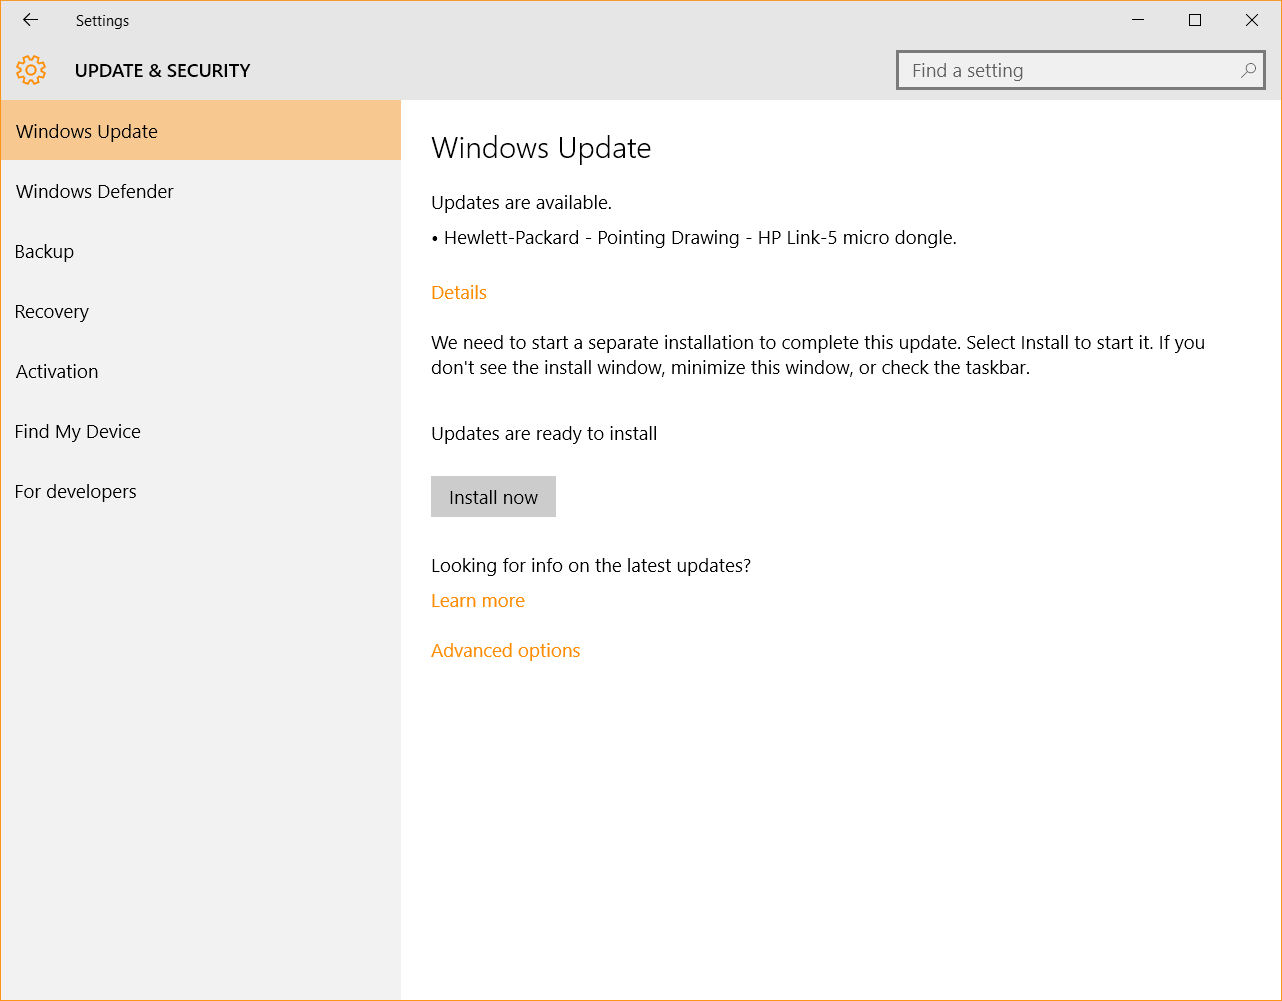 Windows 10 Security Guide - Windows Update